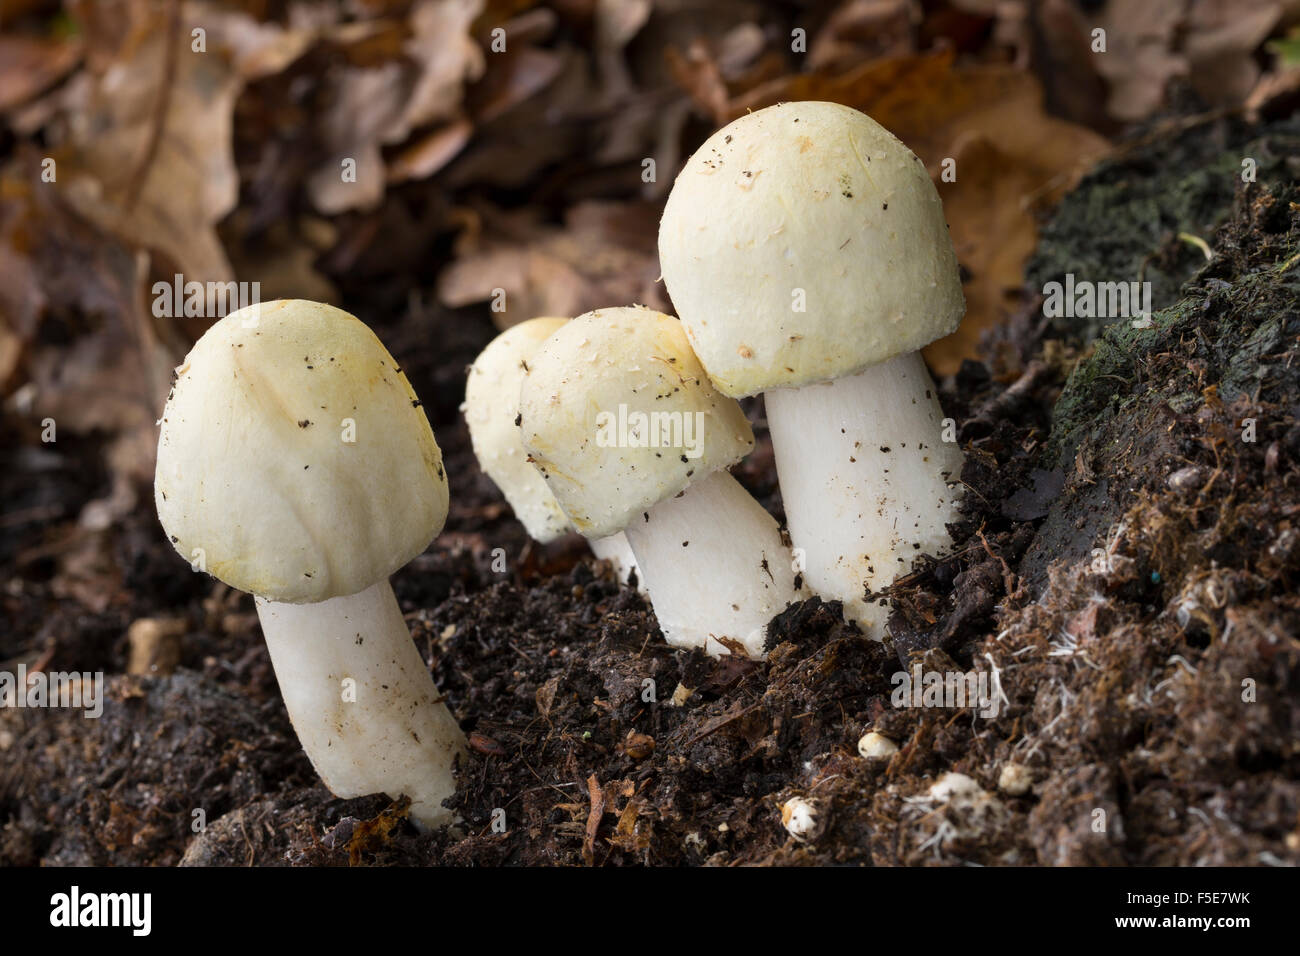 Horse mushroom, Schaf-Champignon, Schafchampignon, Anischampignon, Champignons, Agaricus arvensis, Psalliota arvensis Stock Photo